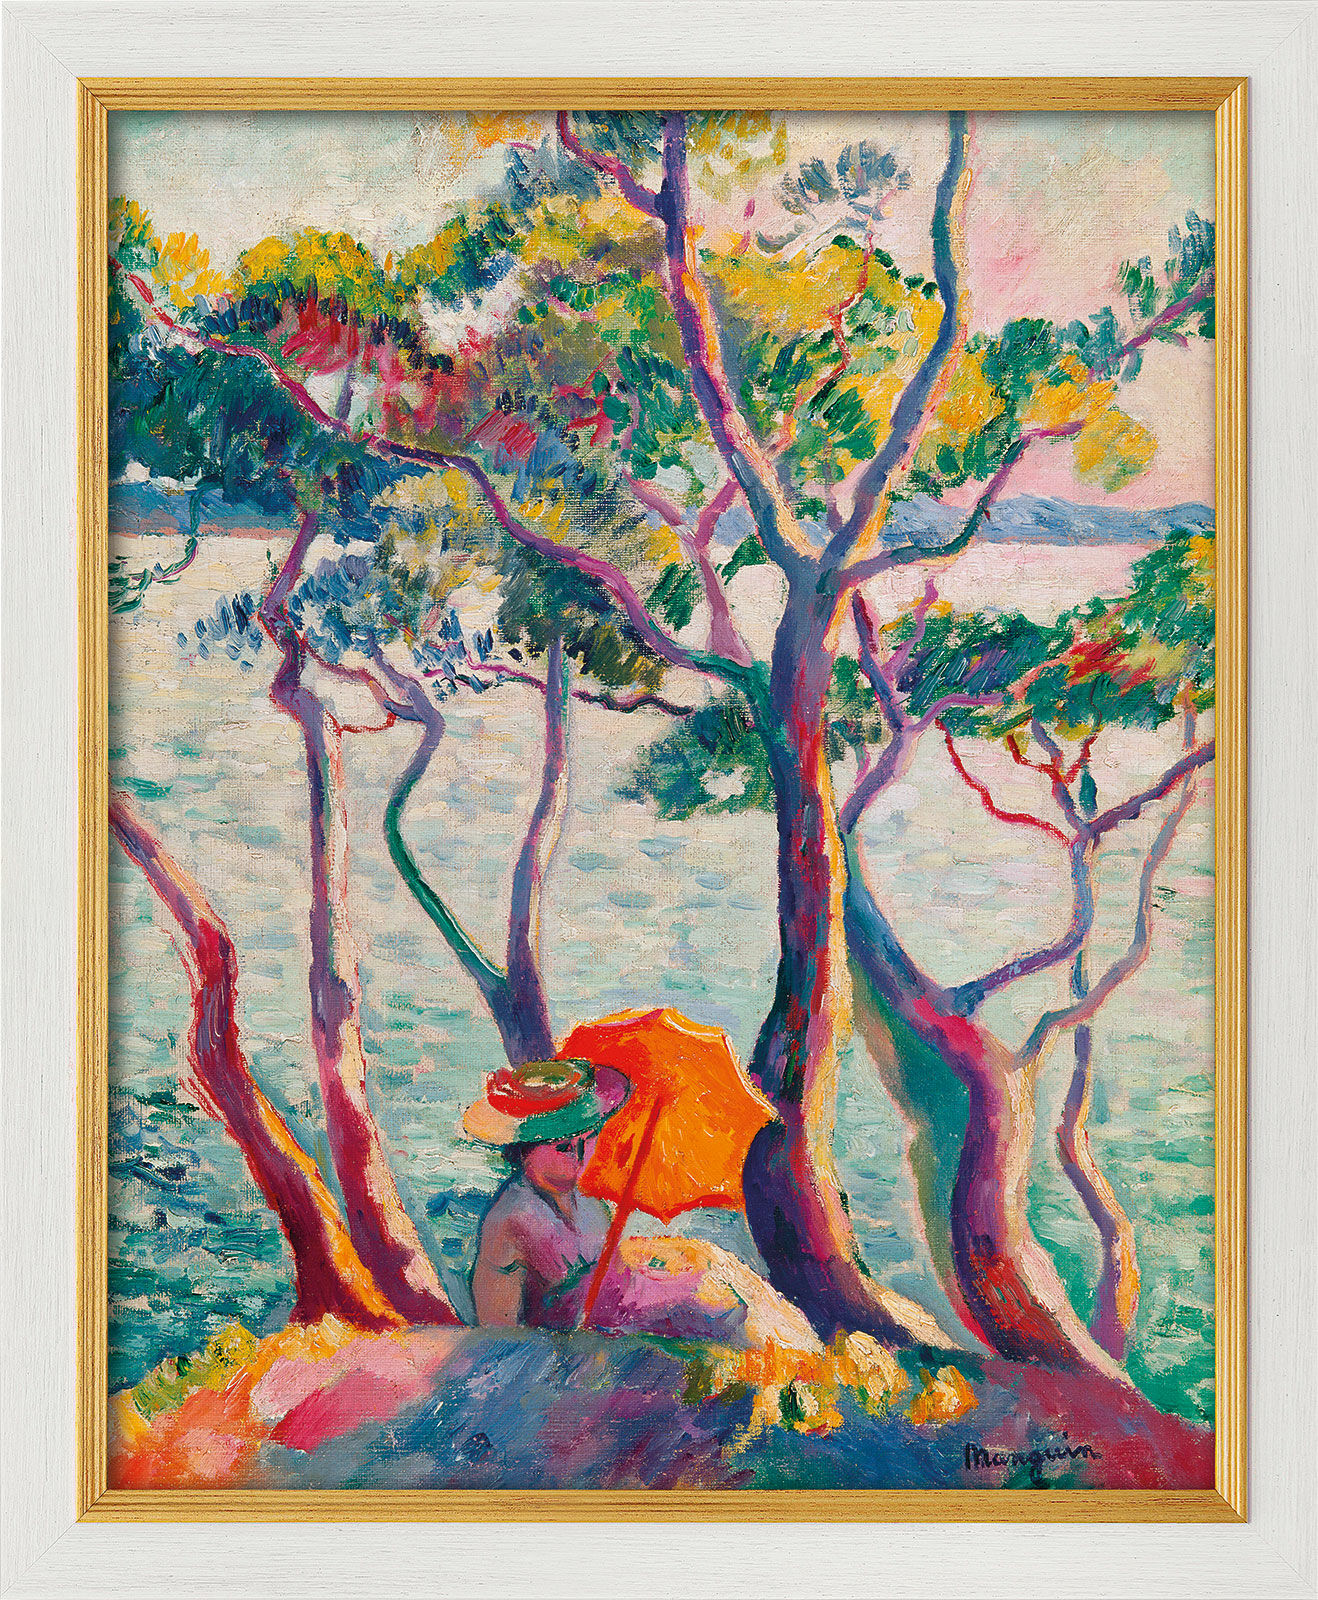 Picture "Jeanne à l'ombrelle, Cavalière" (1905/1906), white and golden framed version by Henri Manguin